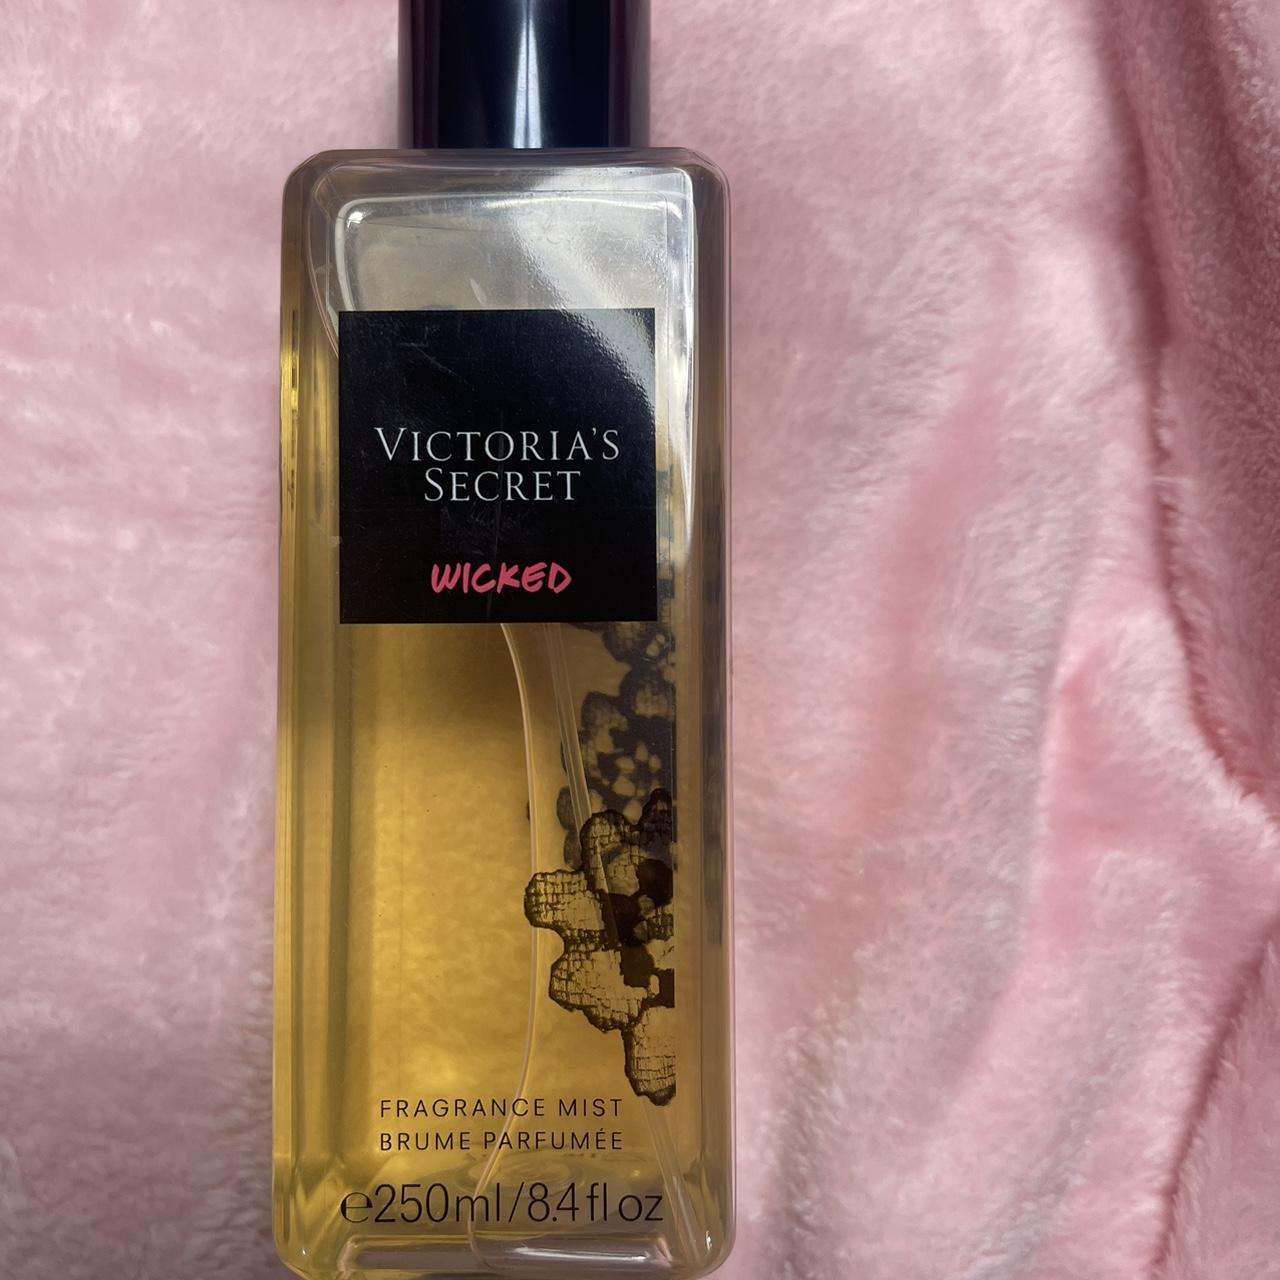 Limited edition 2012 Victoria Secret Fragrance “Wicked” - Depop